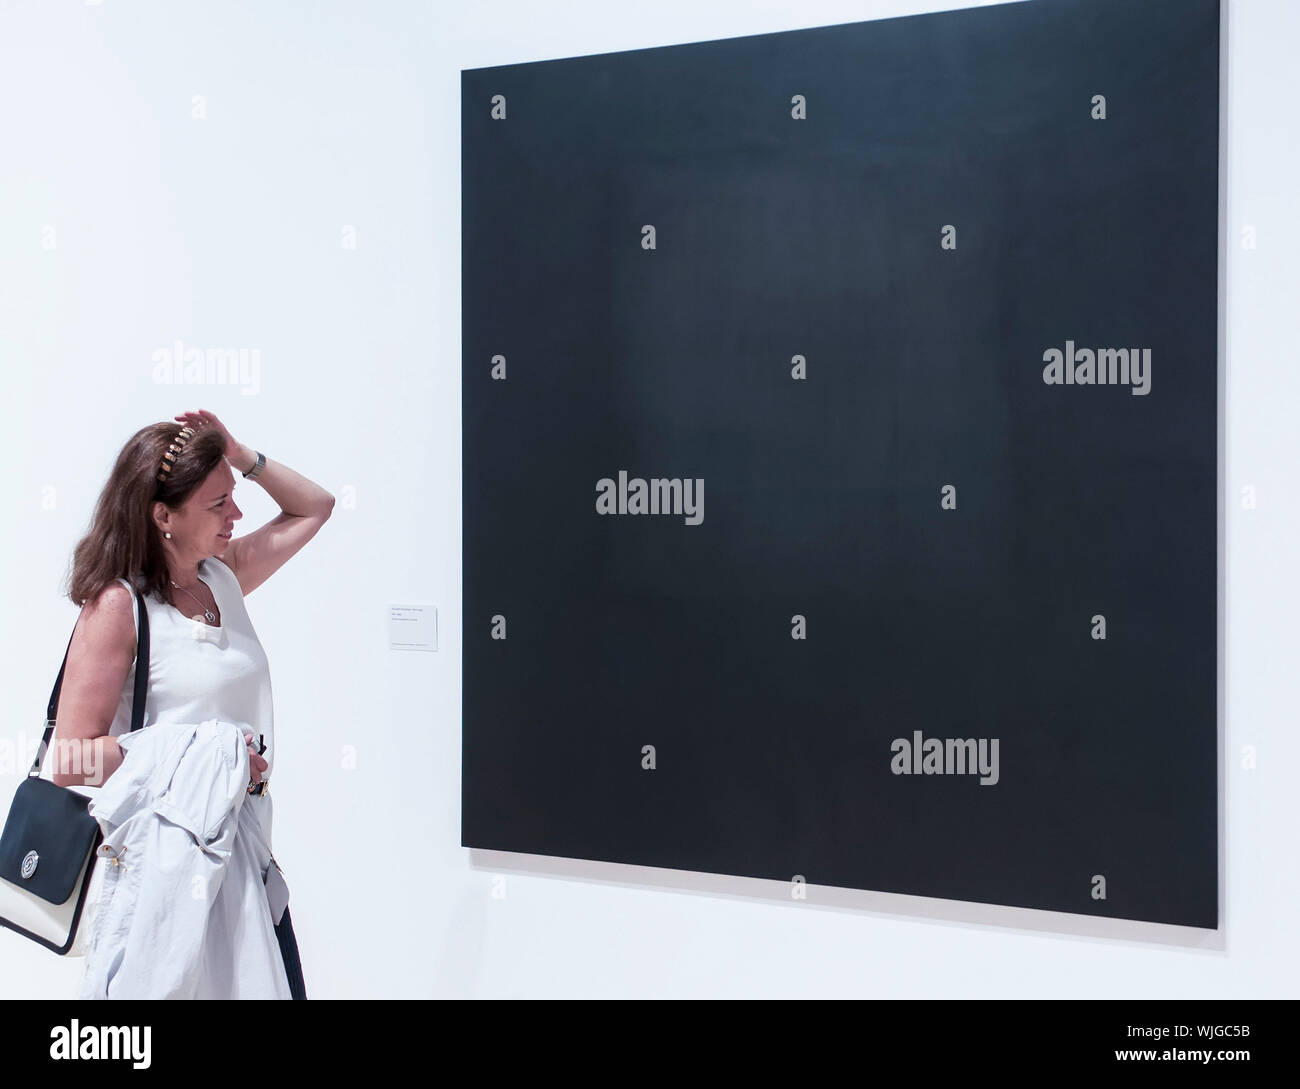 Veil by Shirazeh Houshiary at Tate Britain Gallery, London Stock Photo